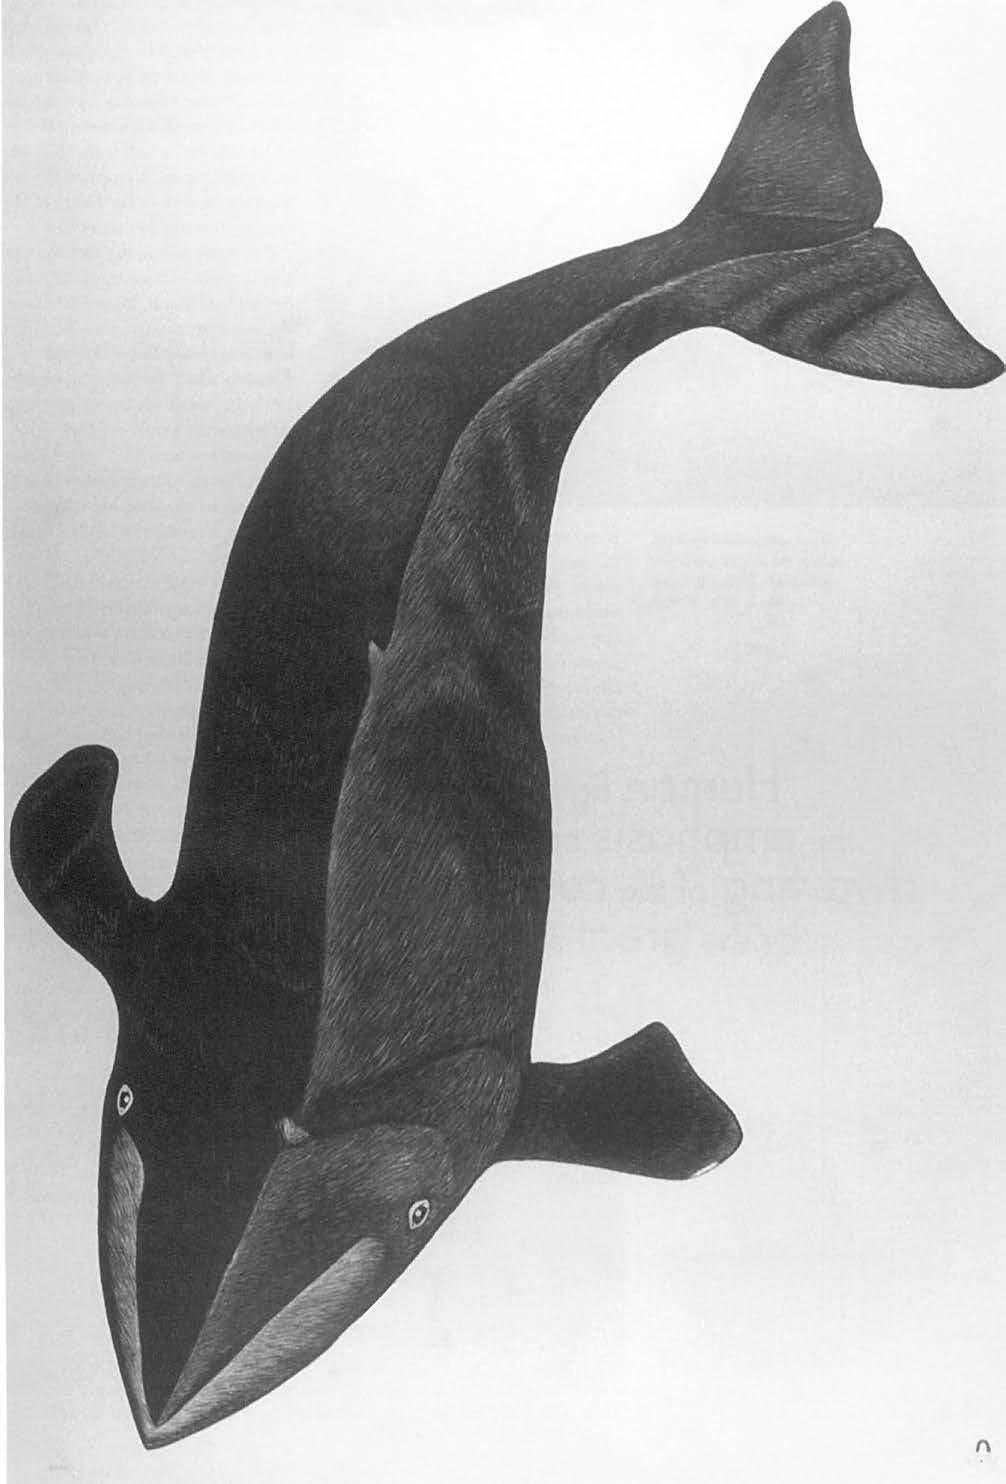 Fig. 1: Arvialuk (Great Big Whole), 2003, Kononginak Pootoogook, Cape Dorset